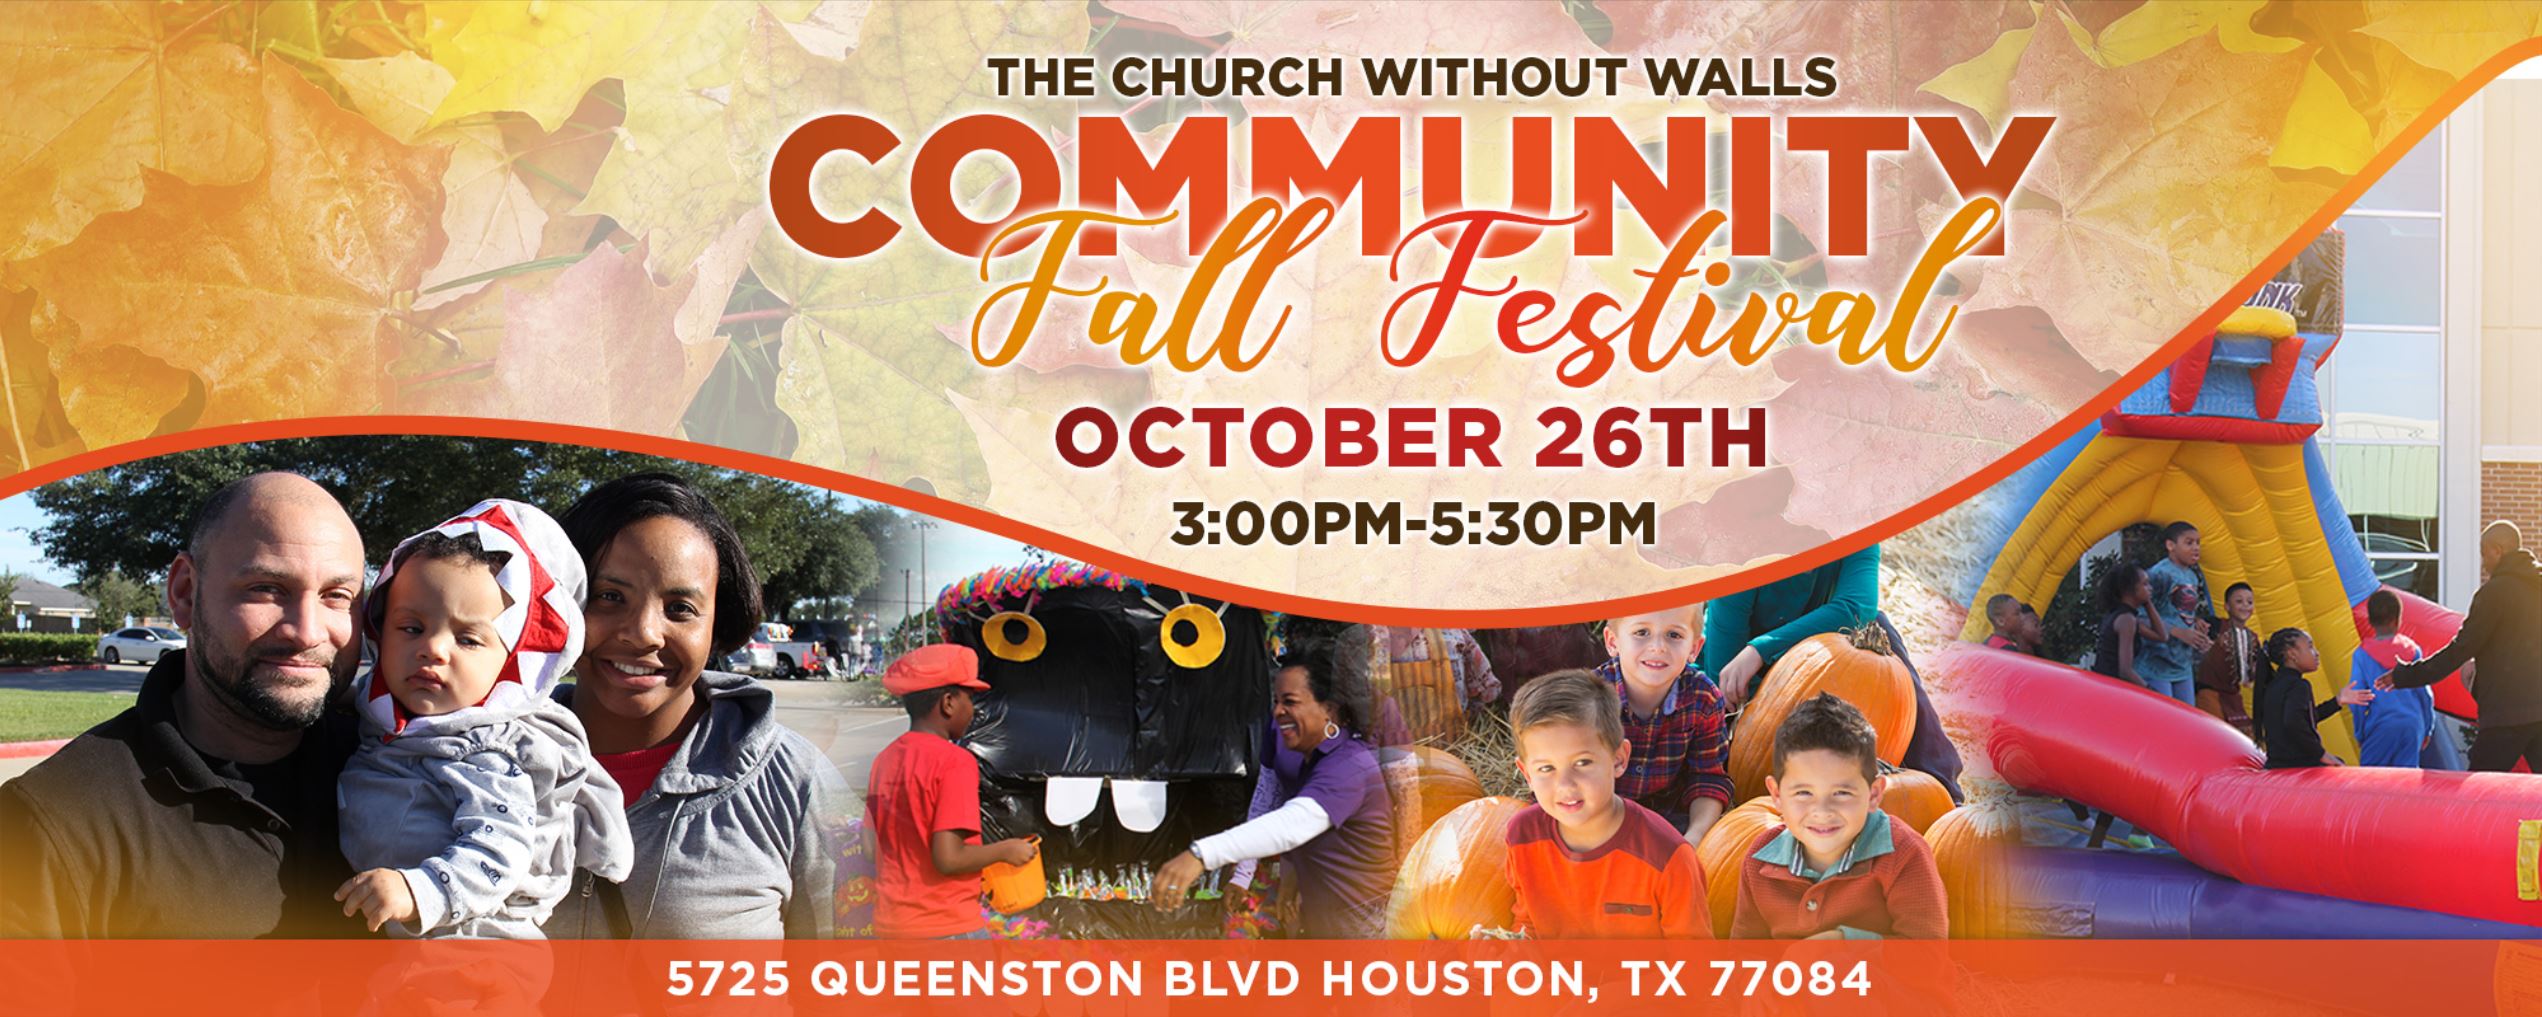 Community Fall Festival - Trunk or Treat